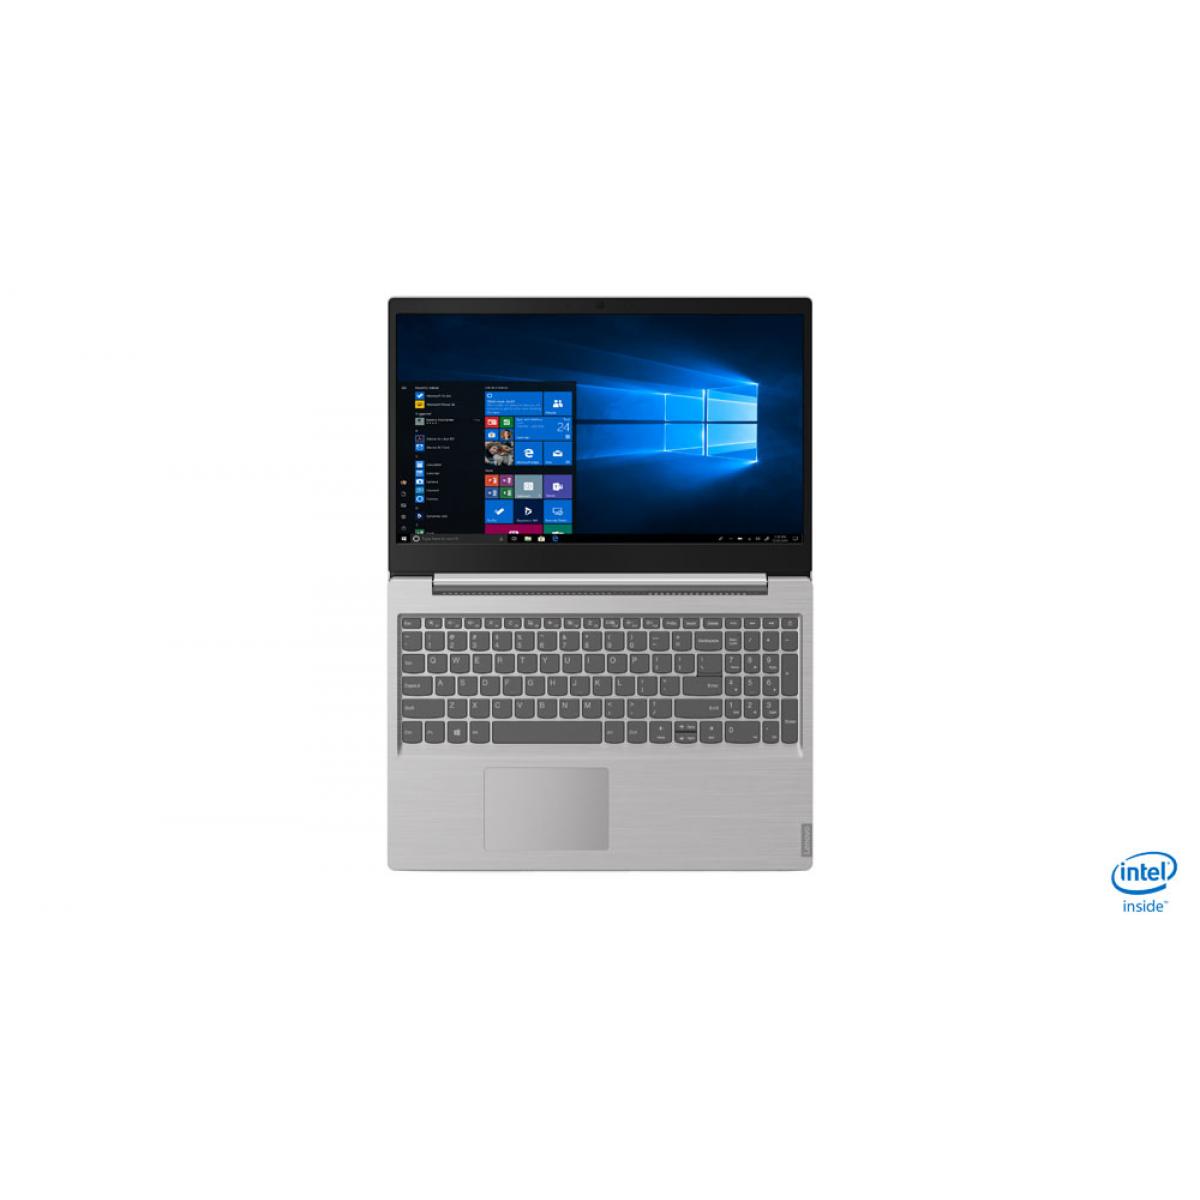 Laptop Lenovo IdeaPad S145-15IWL-Core i5 -8GB - 8th Generation -2GB